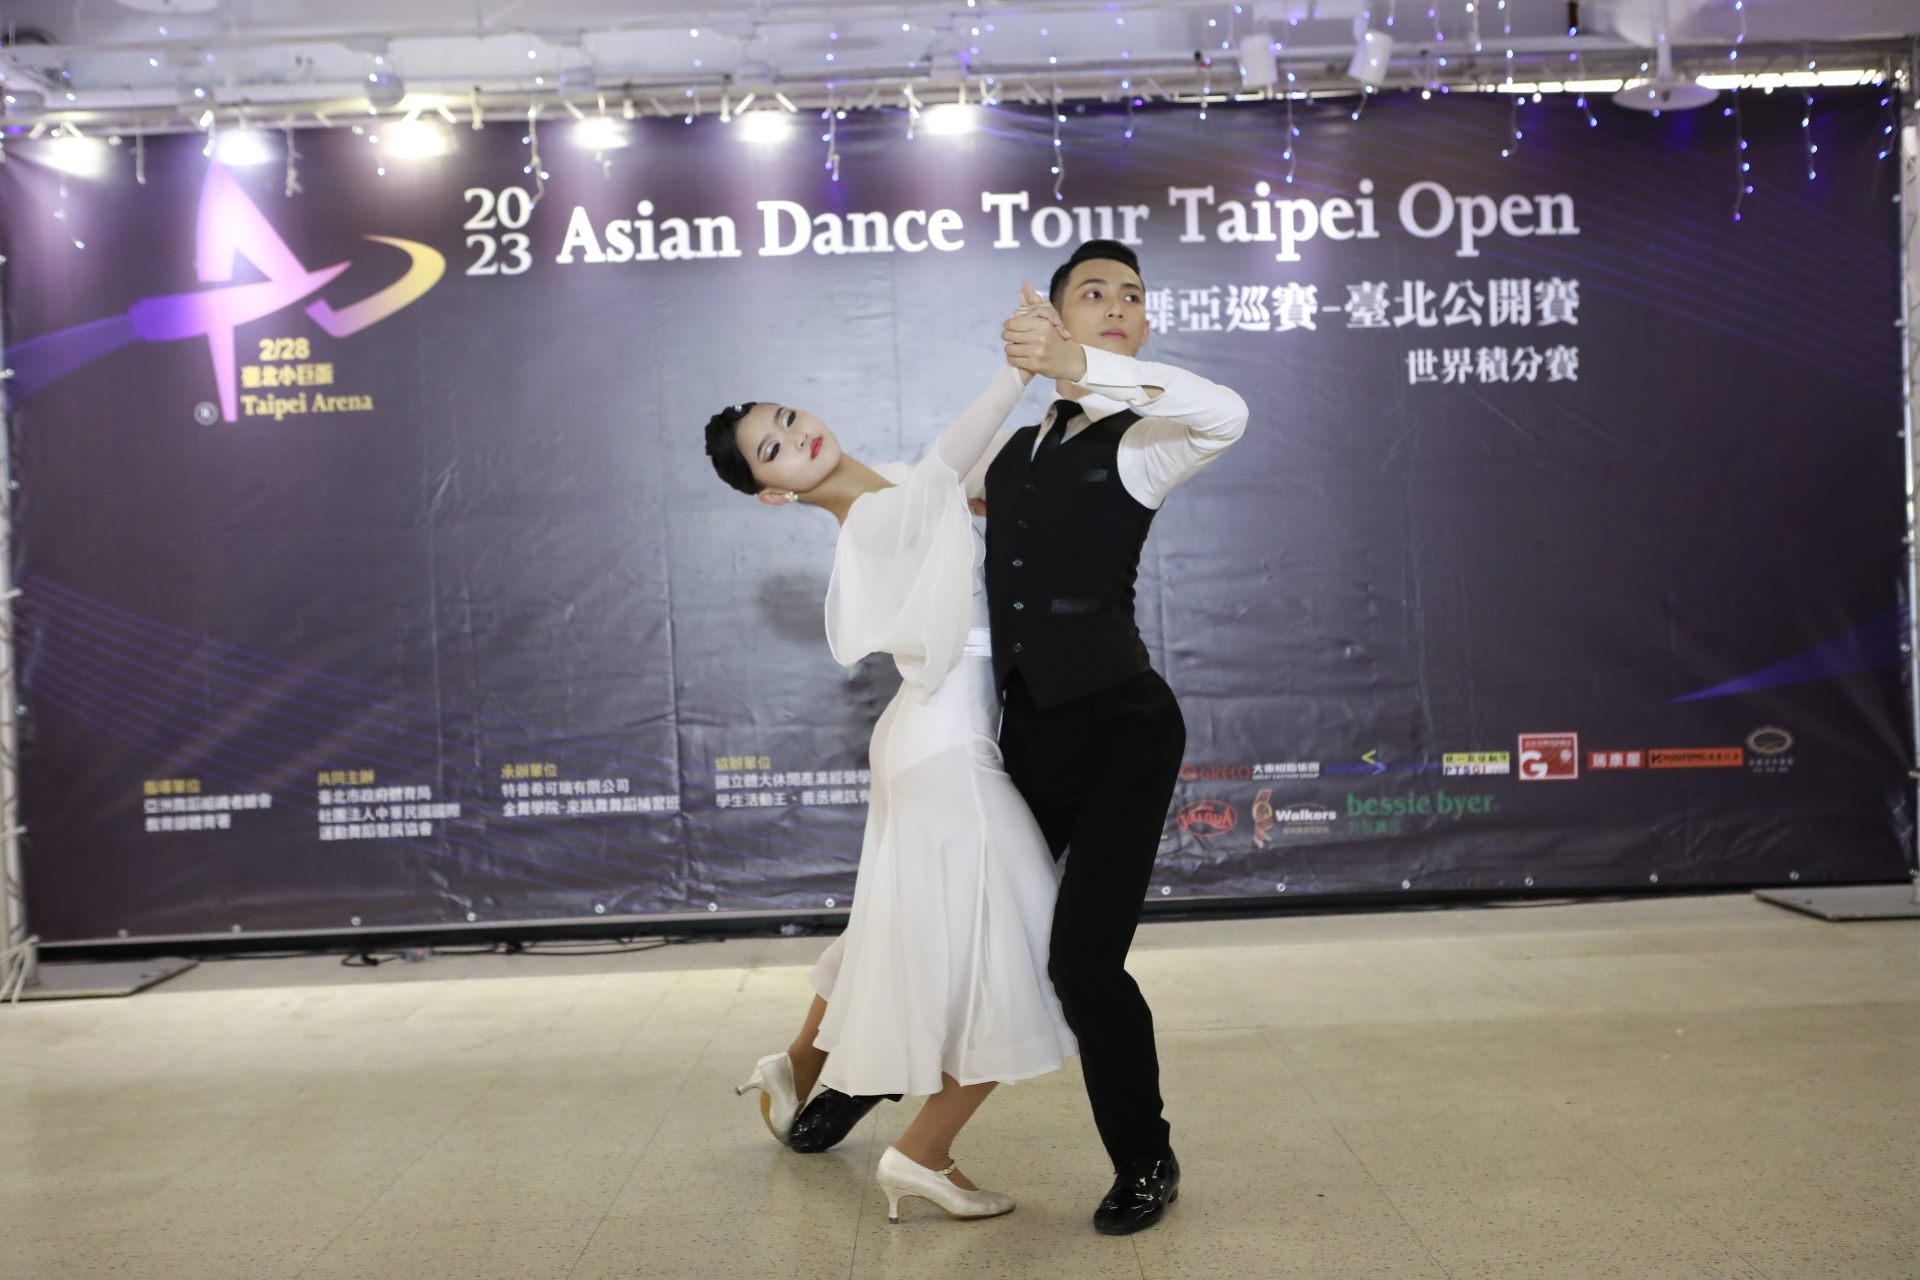 asian dance tour taipei open